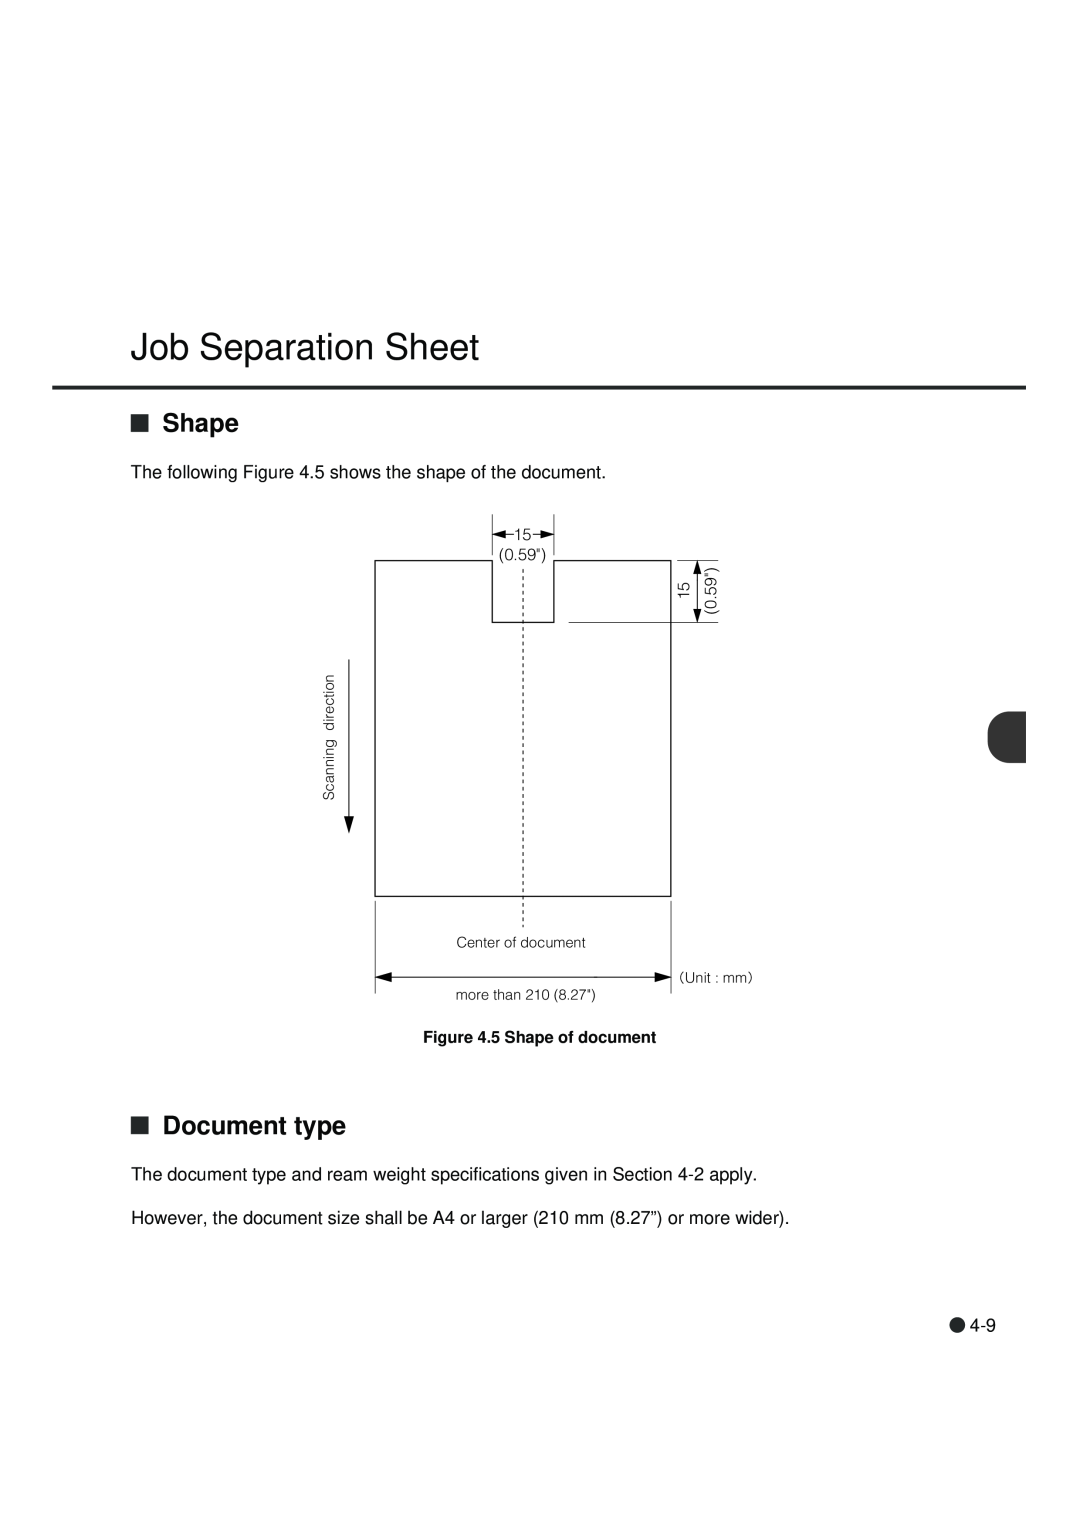 Fujitsu fi-4990C manual Job Separation Sheet, Document type, 5 Shape of document, Scanning direction 